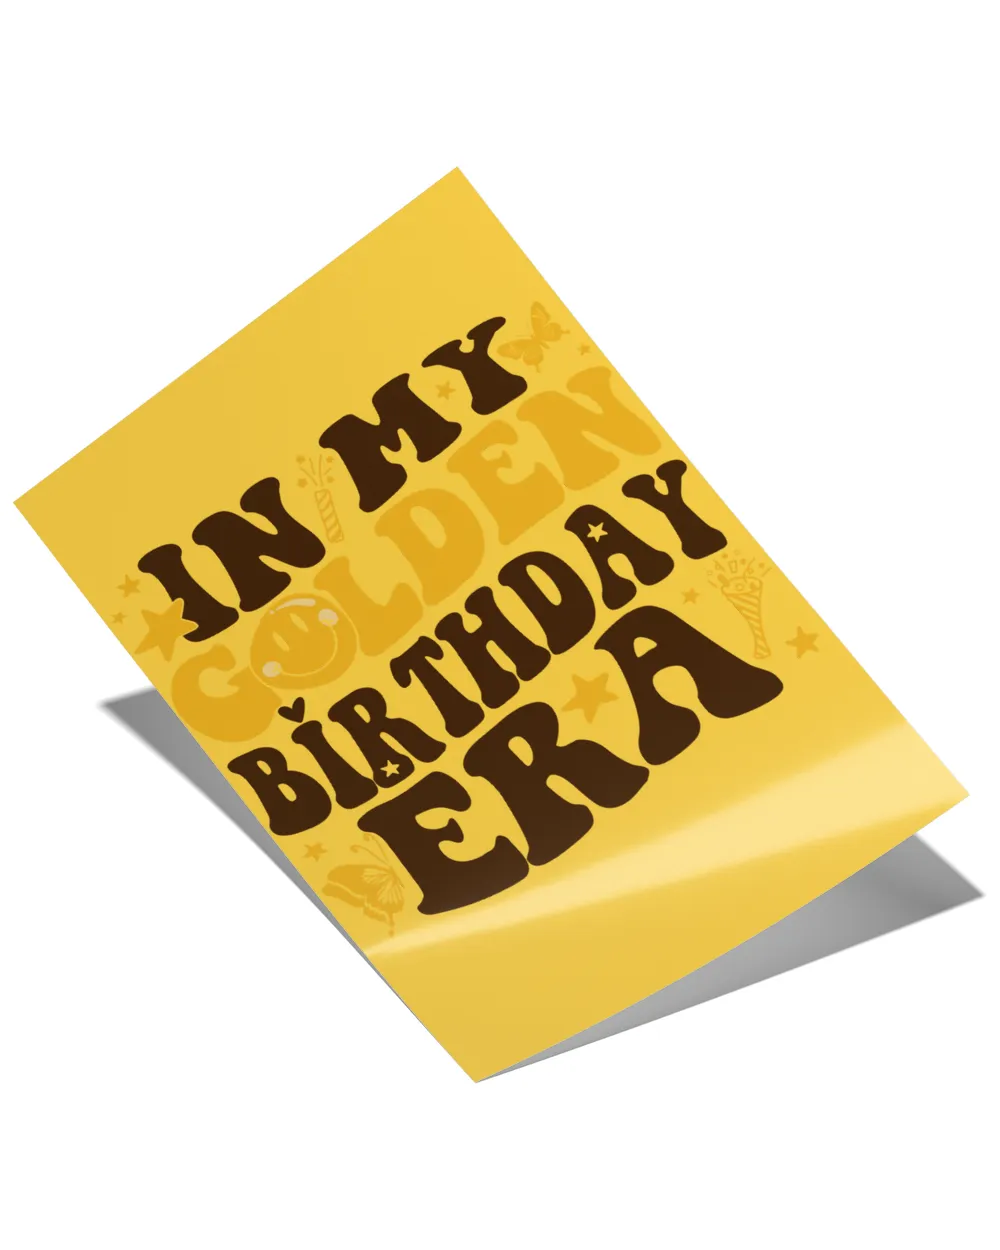 In My Golden Birthday Era Sweatshirt, Golden Bday Shirt, Golden Birthday Gift, In My Birthday Era, Birthday Shirt, Birthday Party Shirt